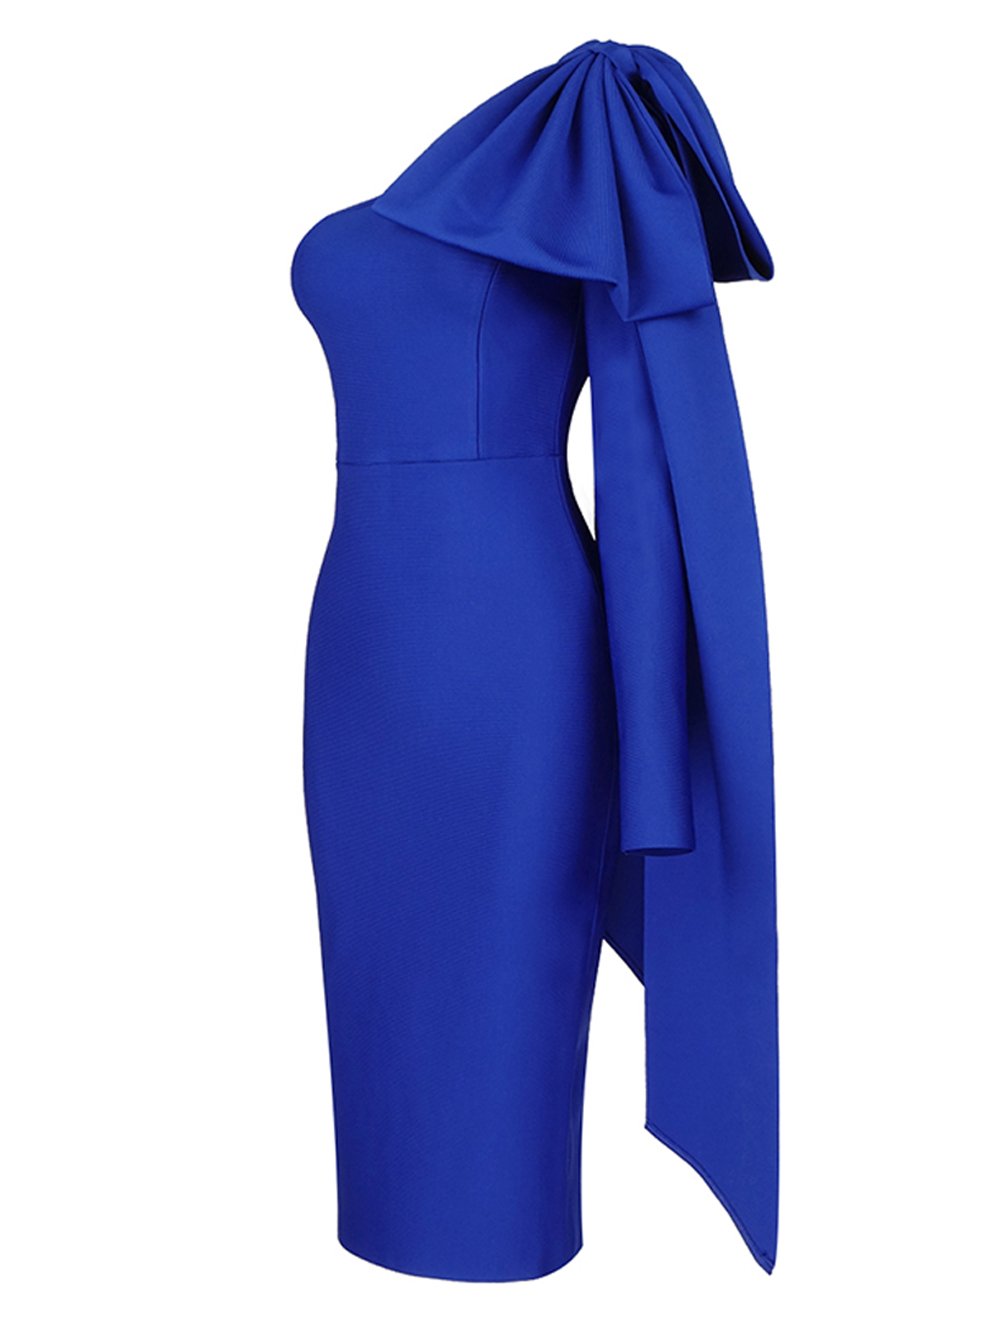 GIGI Wade One Shoulder Midi Dress in Blue